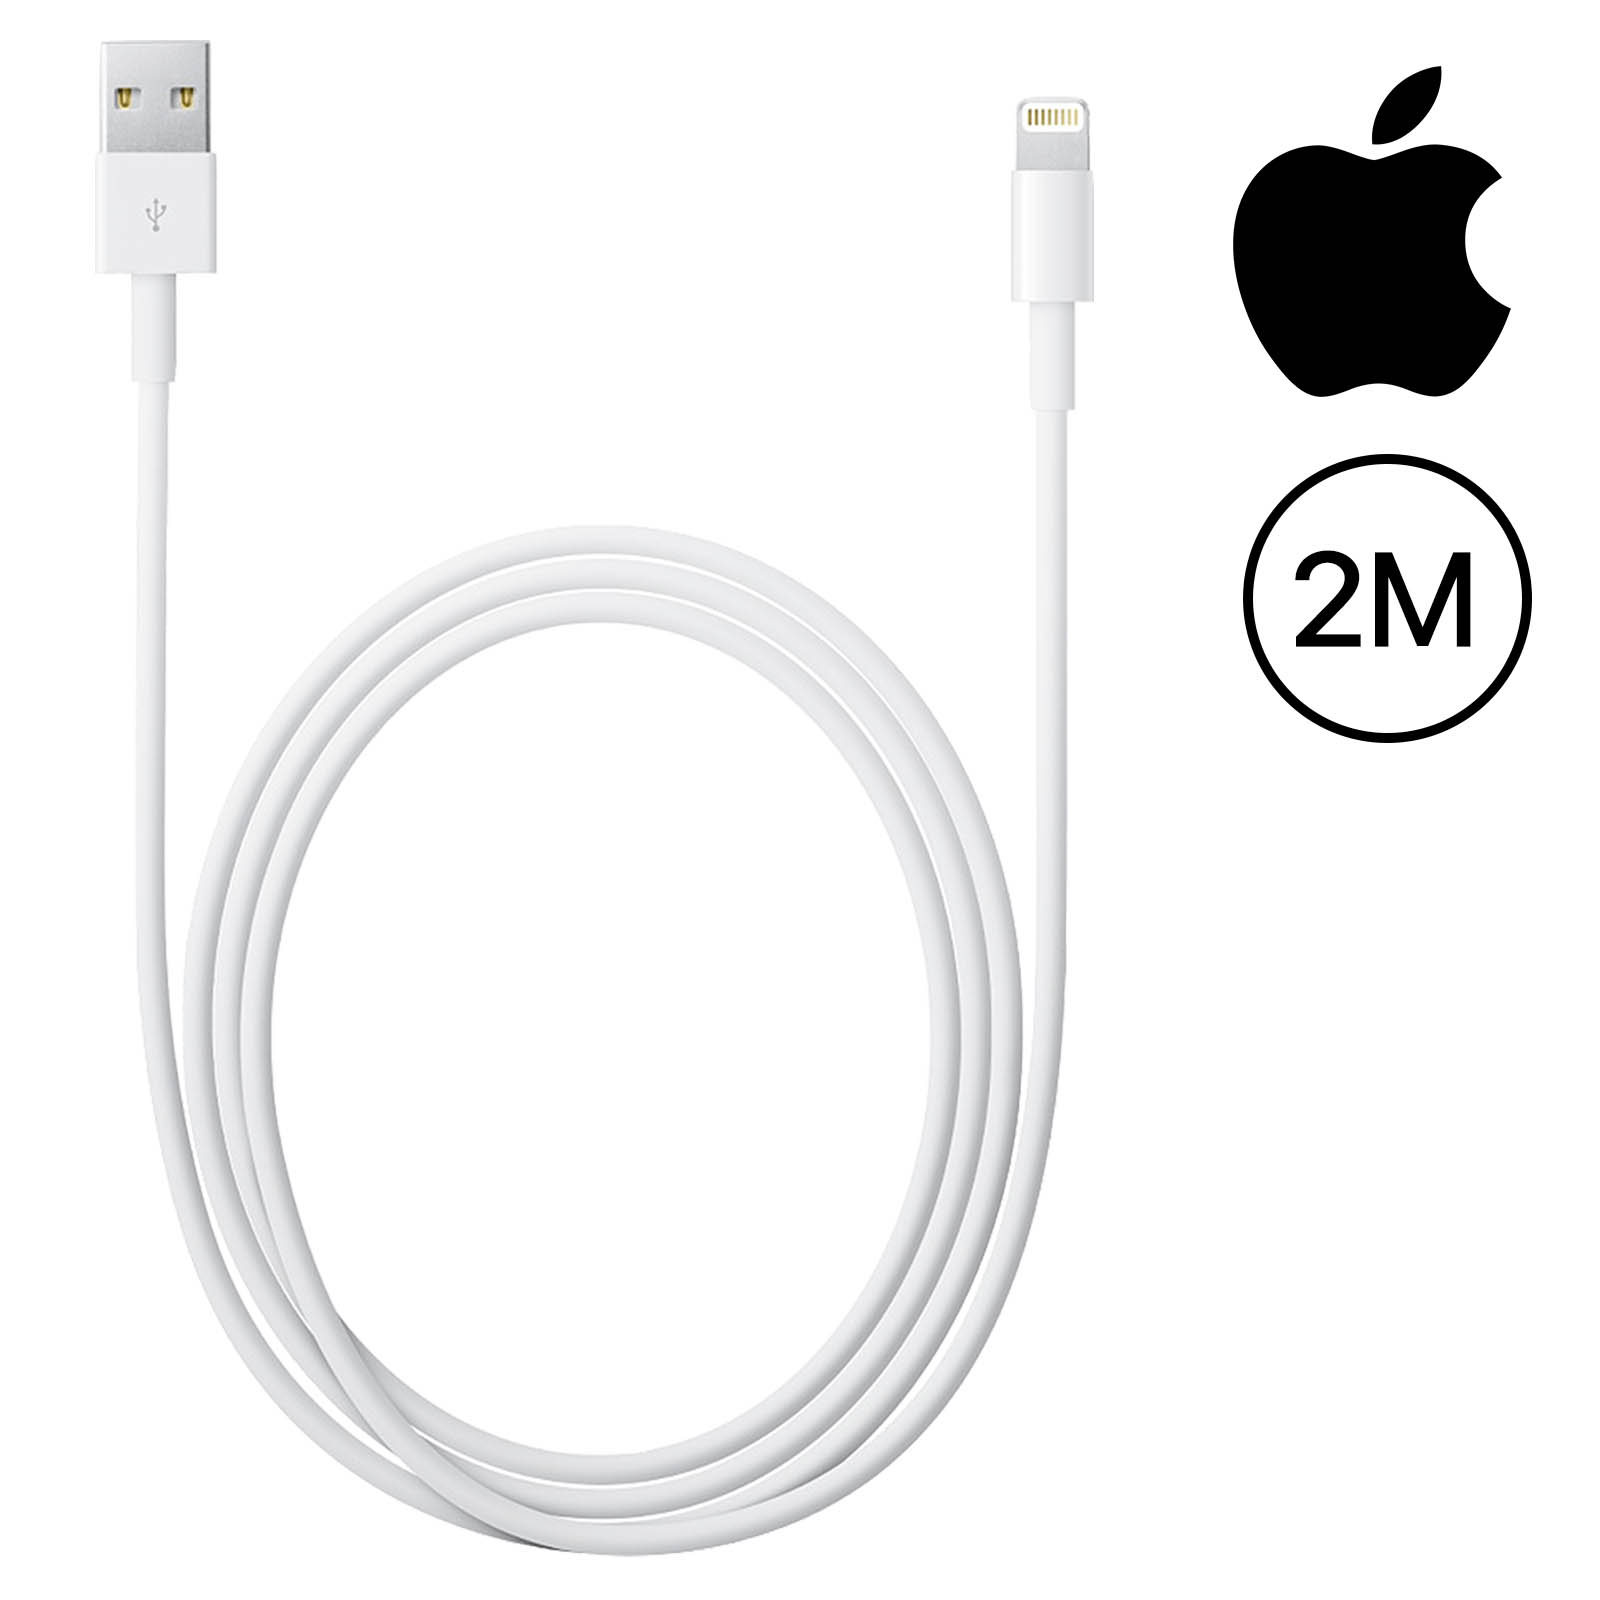 Cable iPhone - iPad Original Apple long. 2m connect. Lightning - Apple  MD819ZM/A - Français